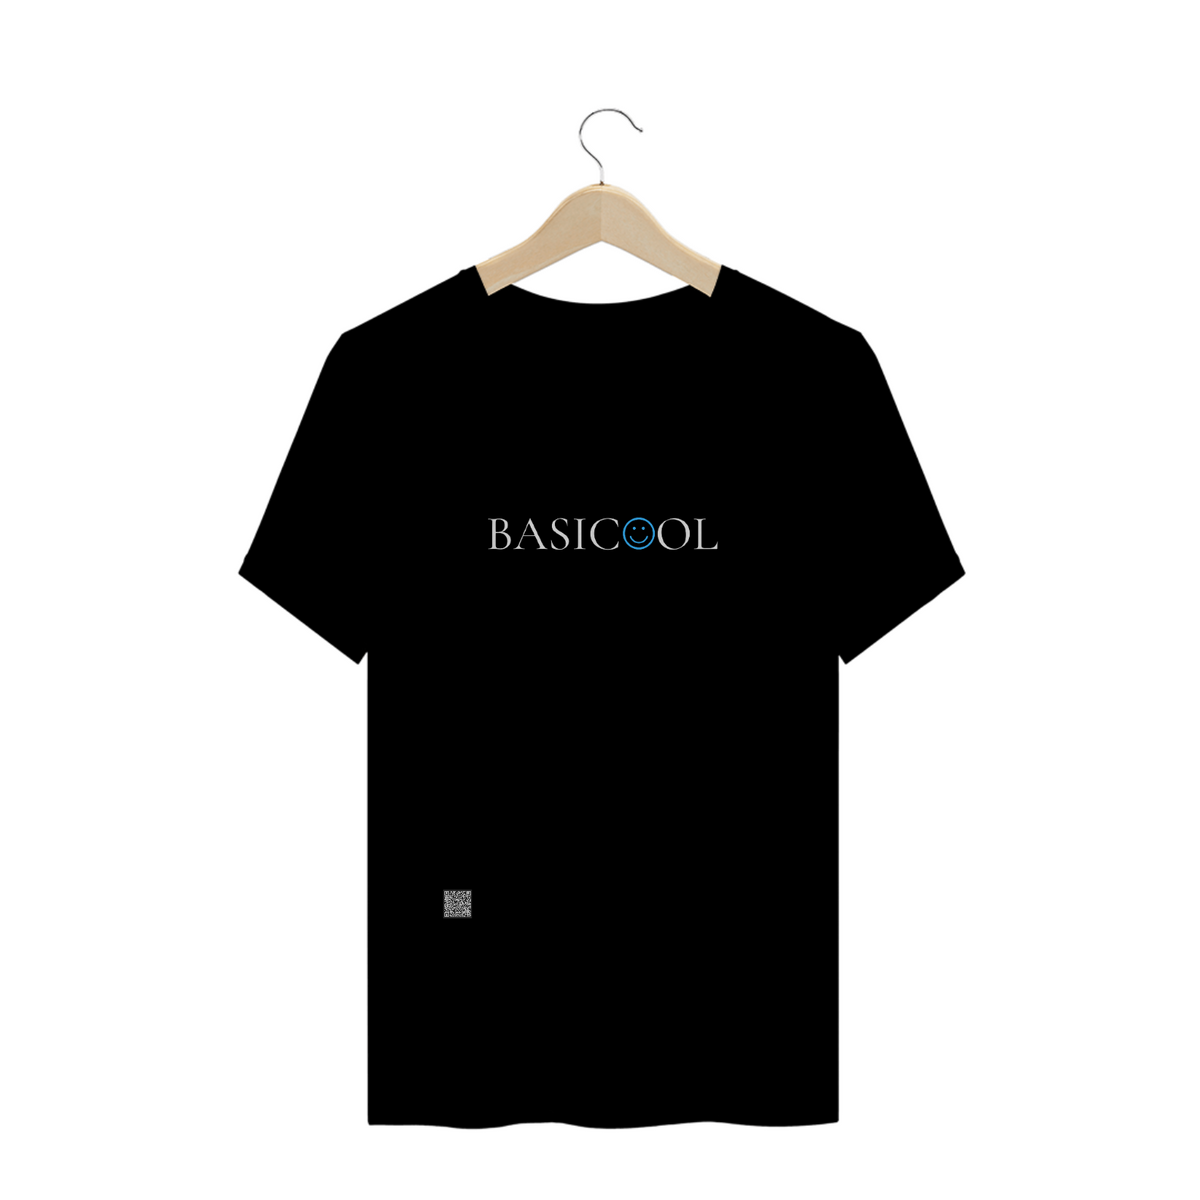 Nome do produto: T-shirt Basicool